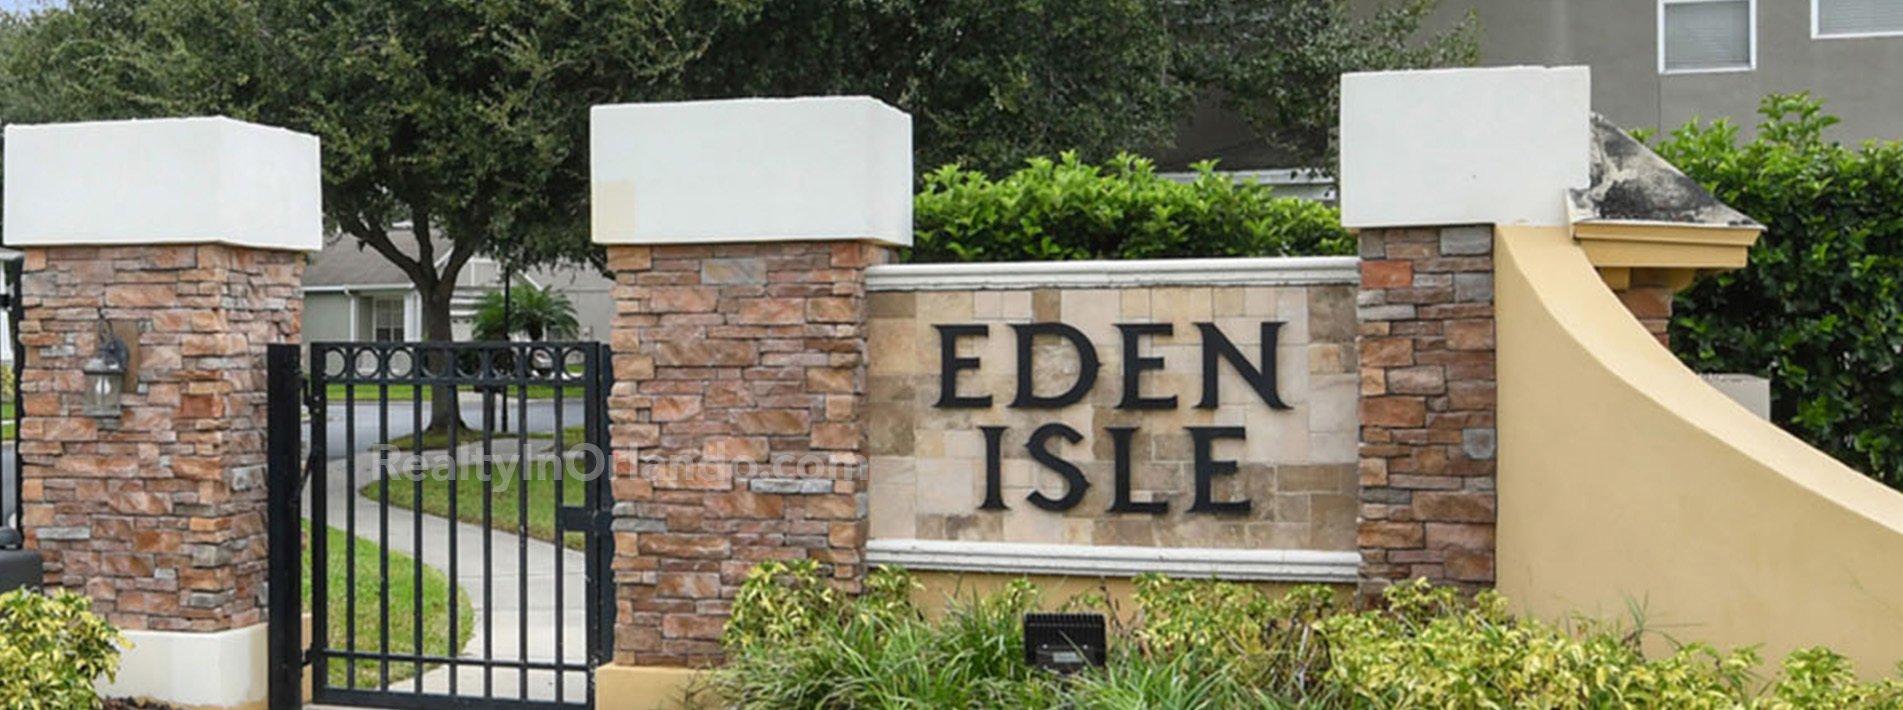 Eden Isle Windermere